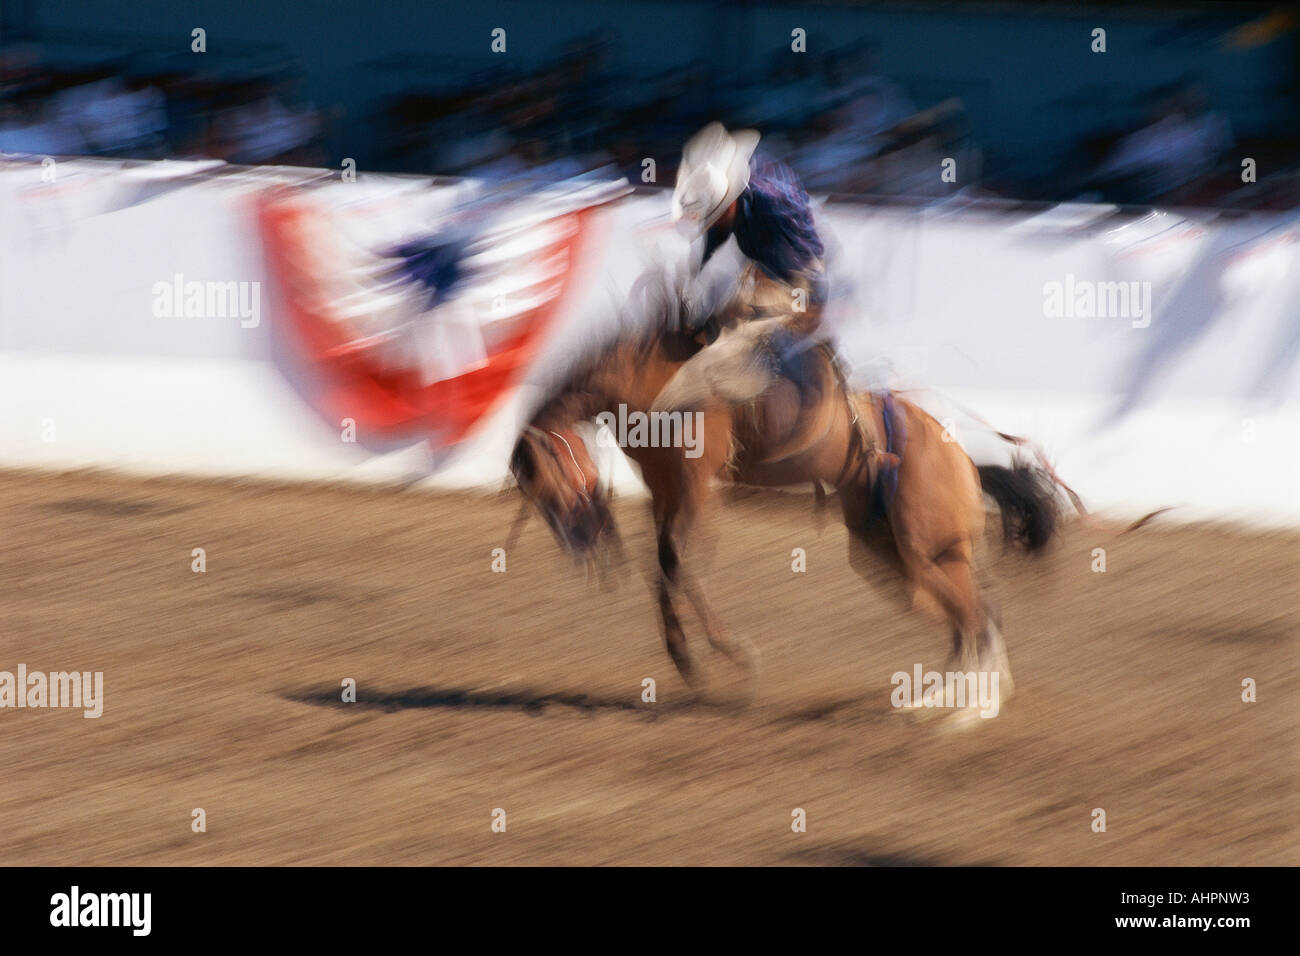 Photo impression of bronco rider at a rodeo Santa Barbara California Stock Photo